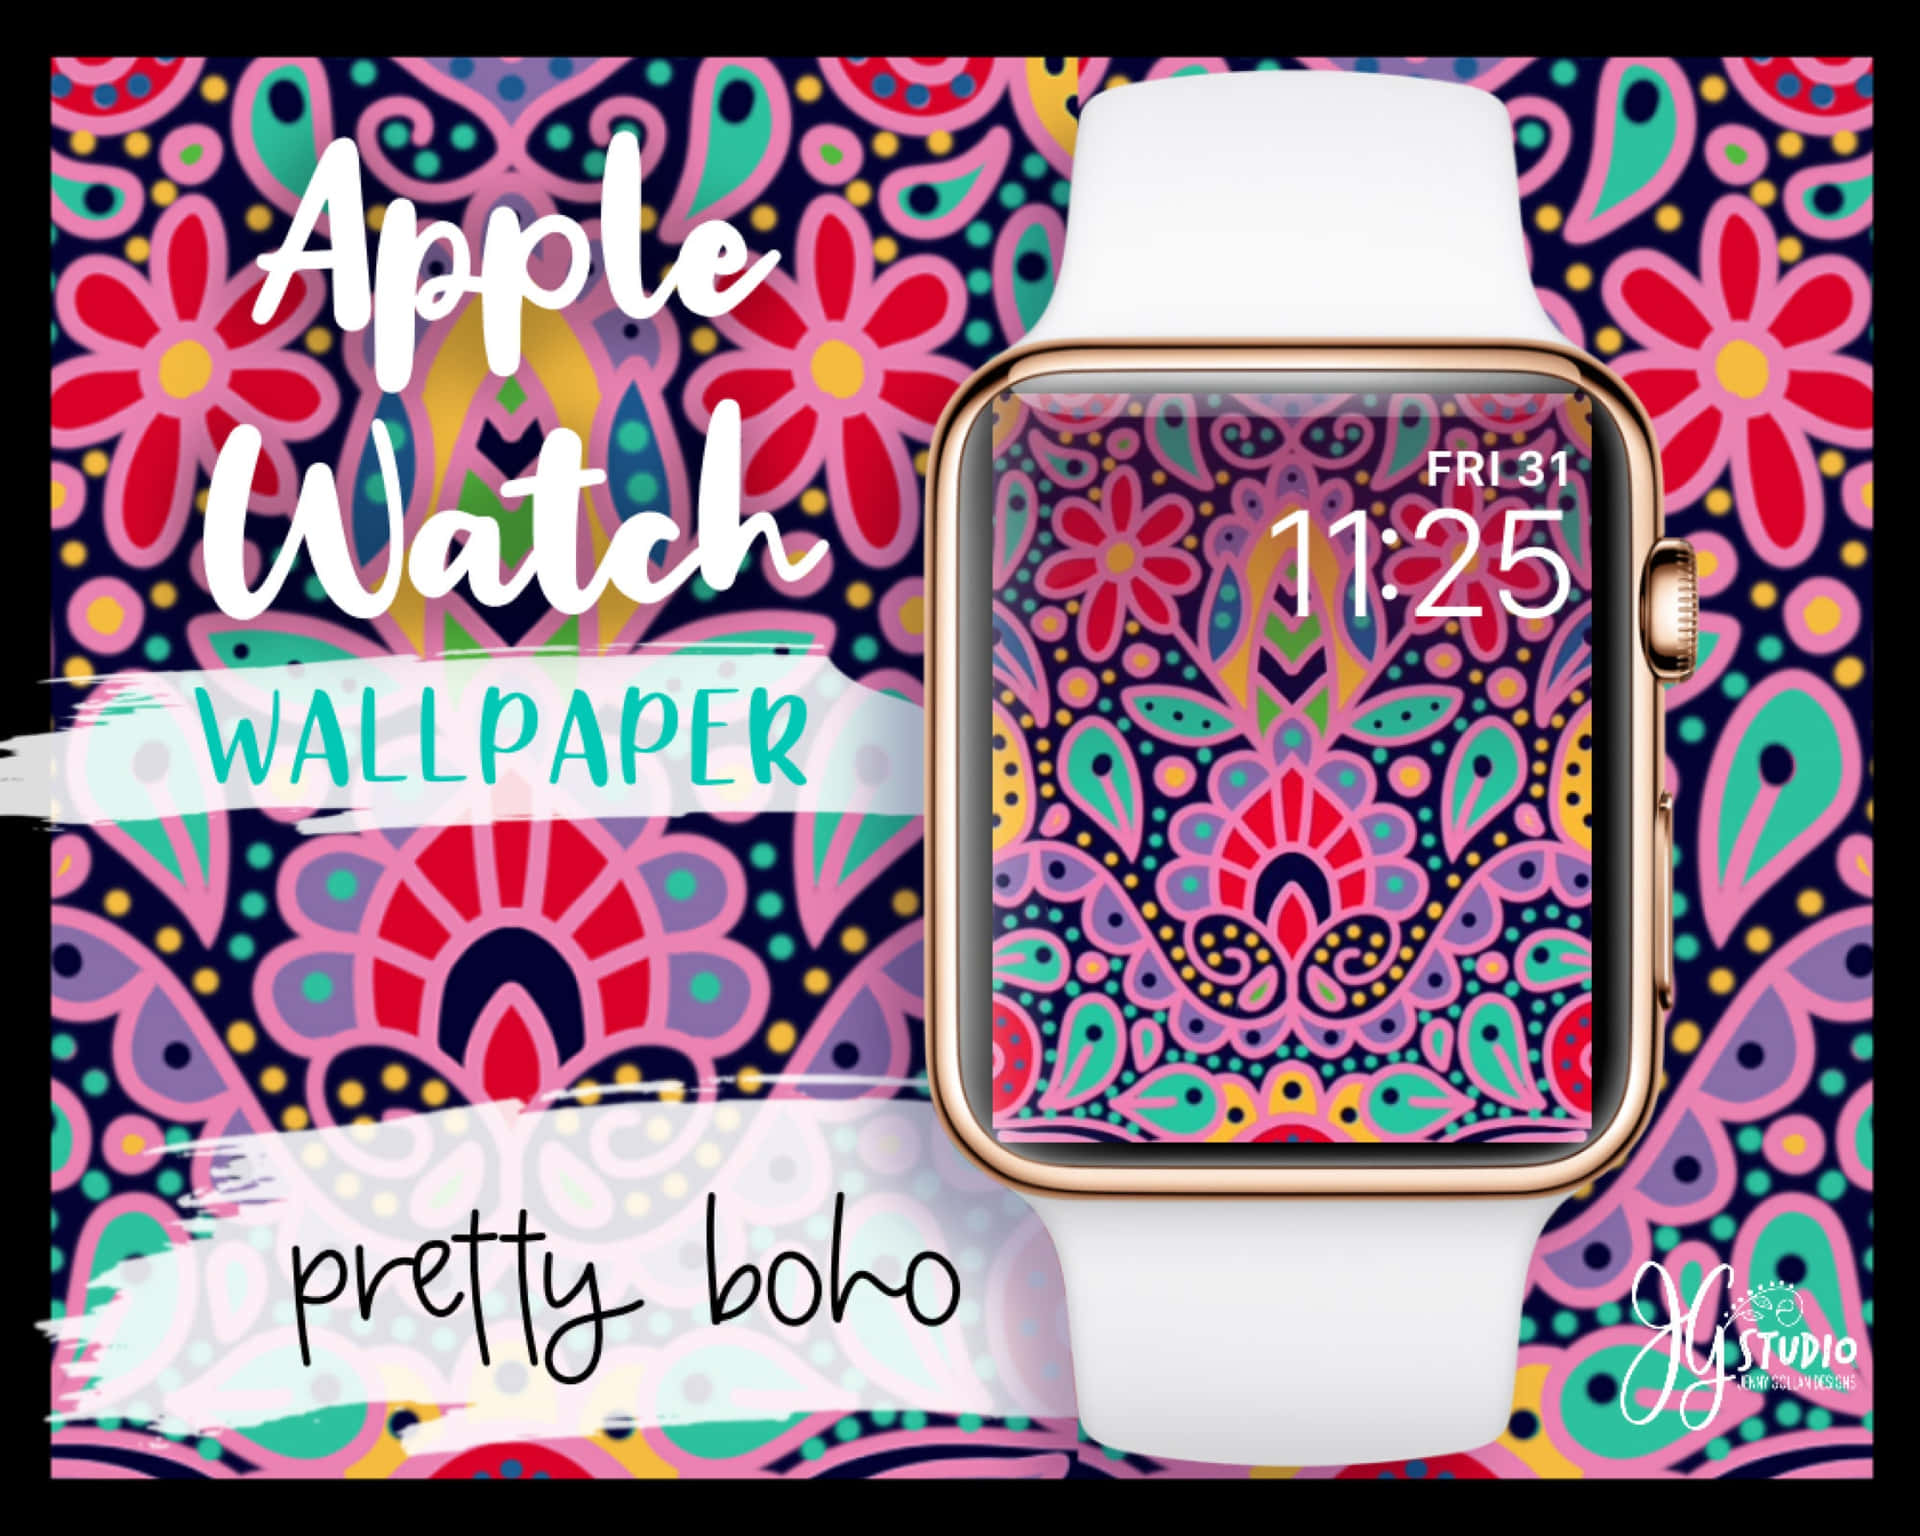 100+] Cute Apple Watch Face Wallpapers 